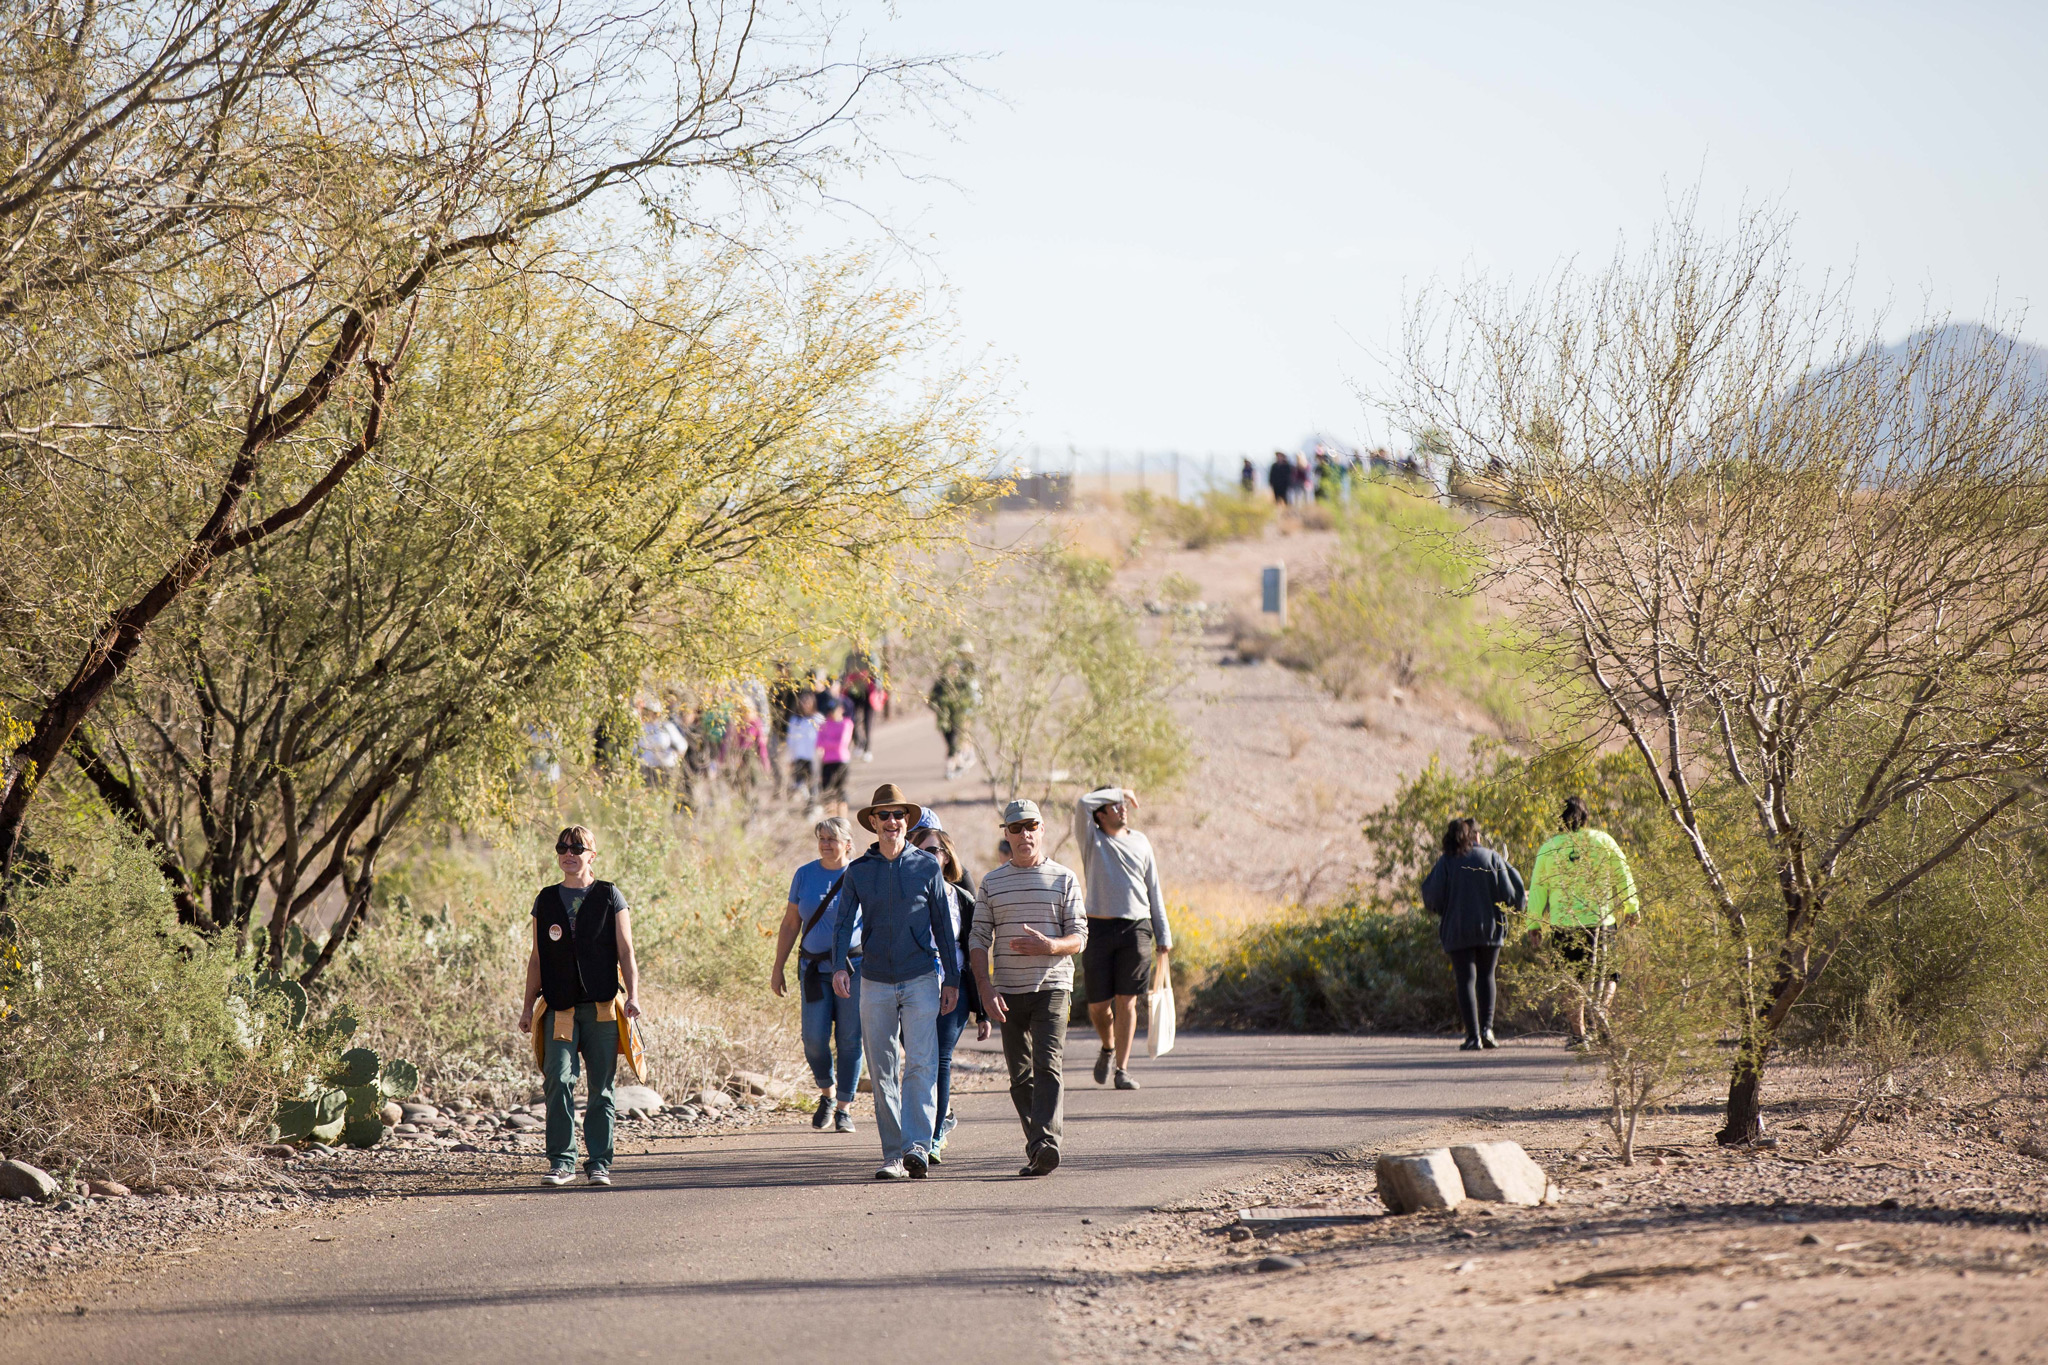 group of people walking on path in desert landscape